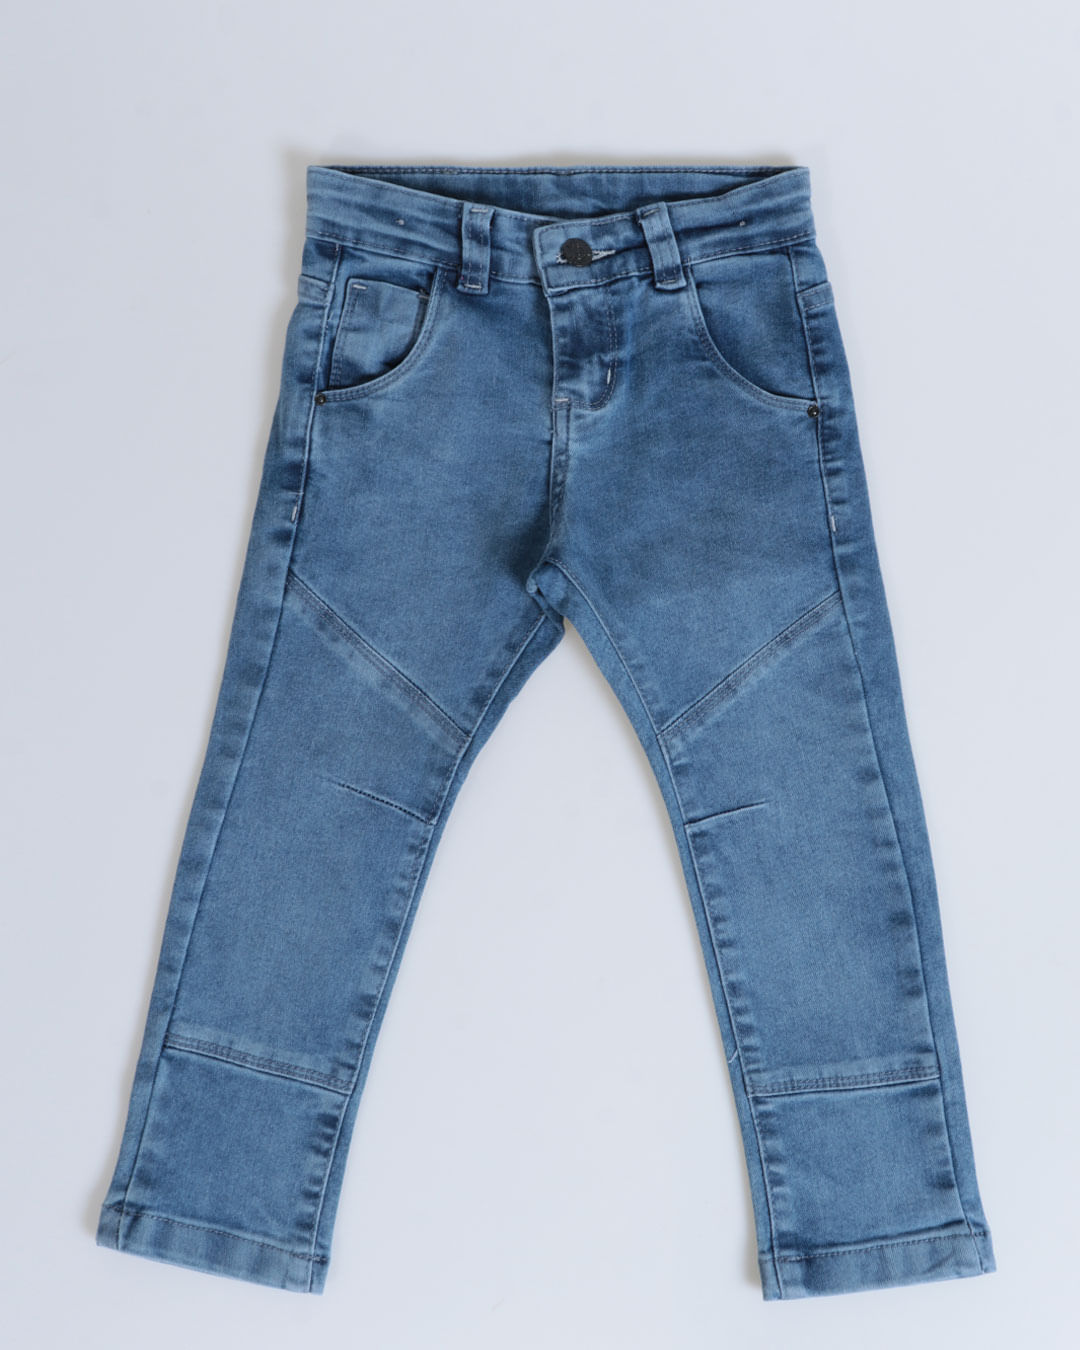 Calca-Jeans-10801-Masc-13-Lc---Blue-Jeans-Medio